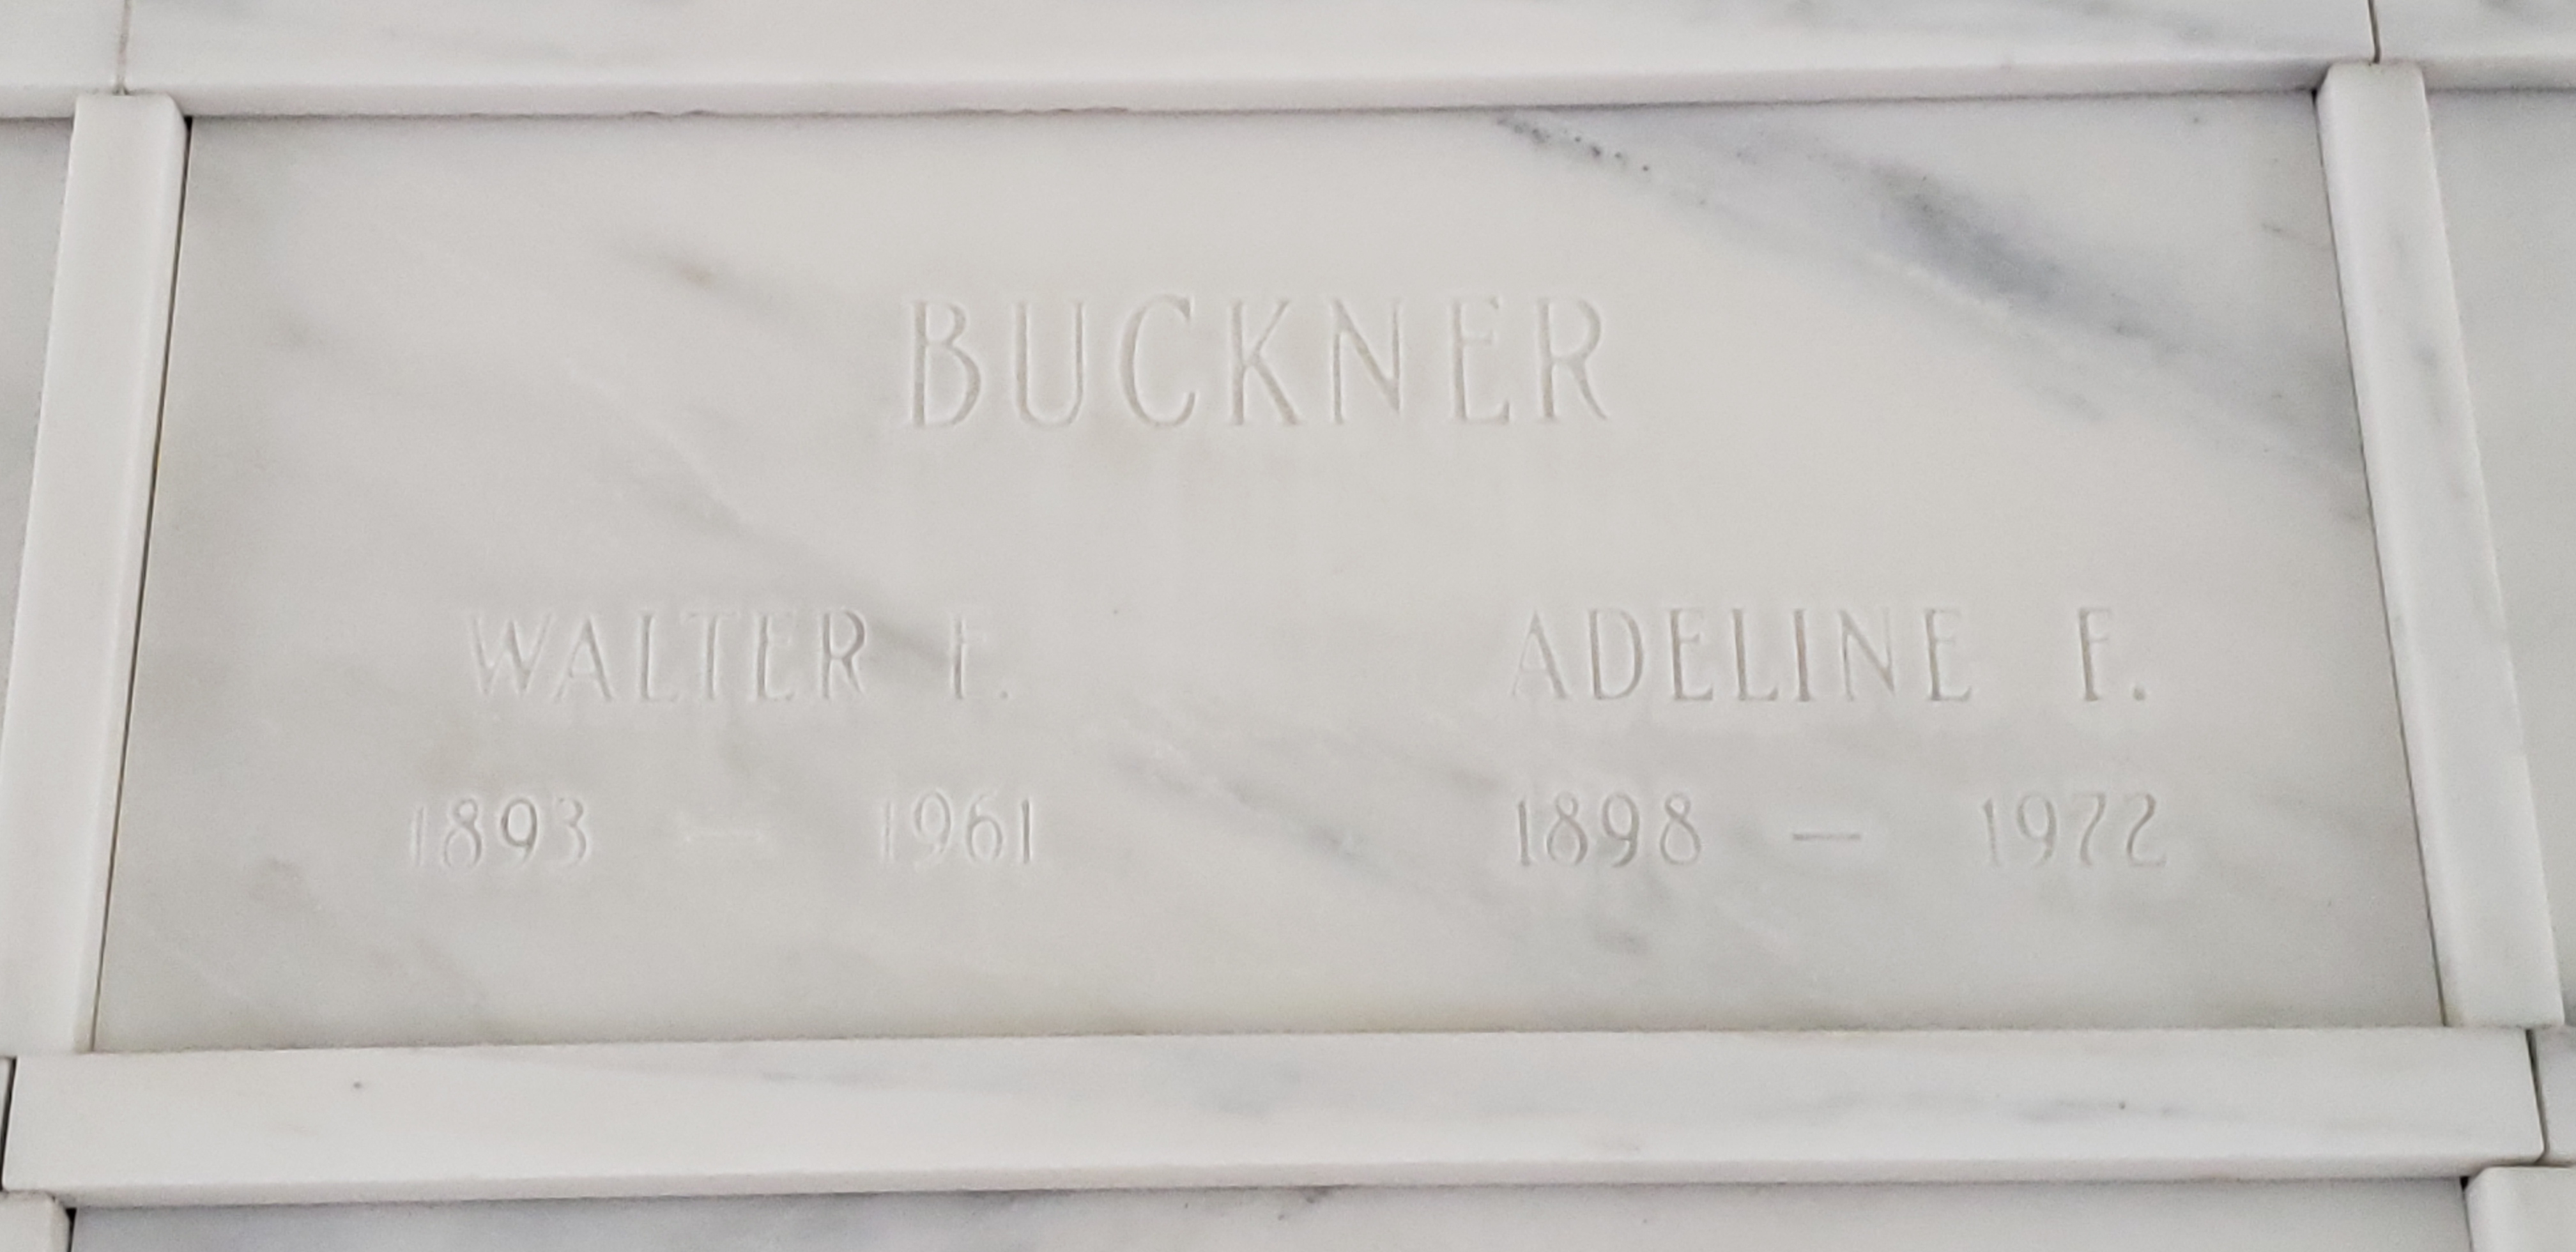 Adeline F Buckner